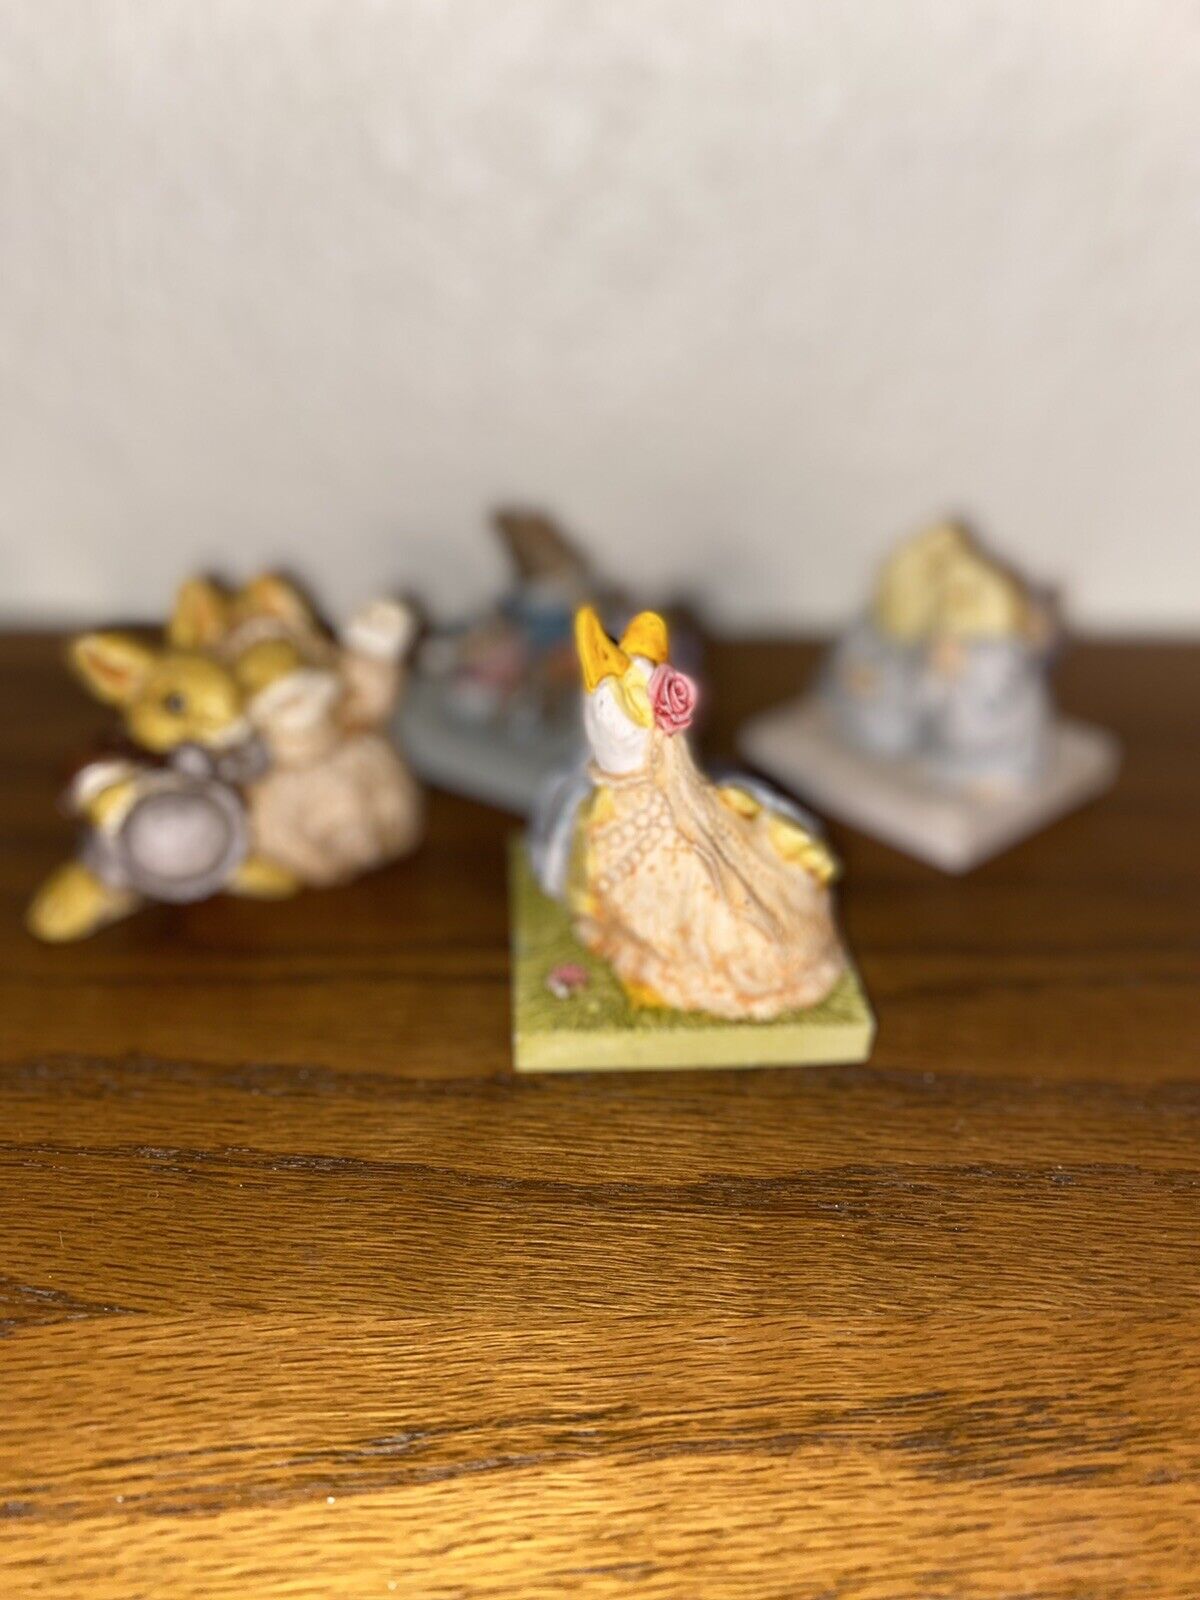 Artefice Ottanta Mice Angels Singing Rabbits Wedding Ducks Lot Italy Vintage